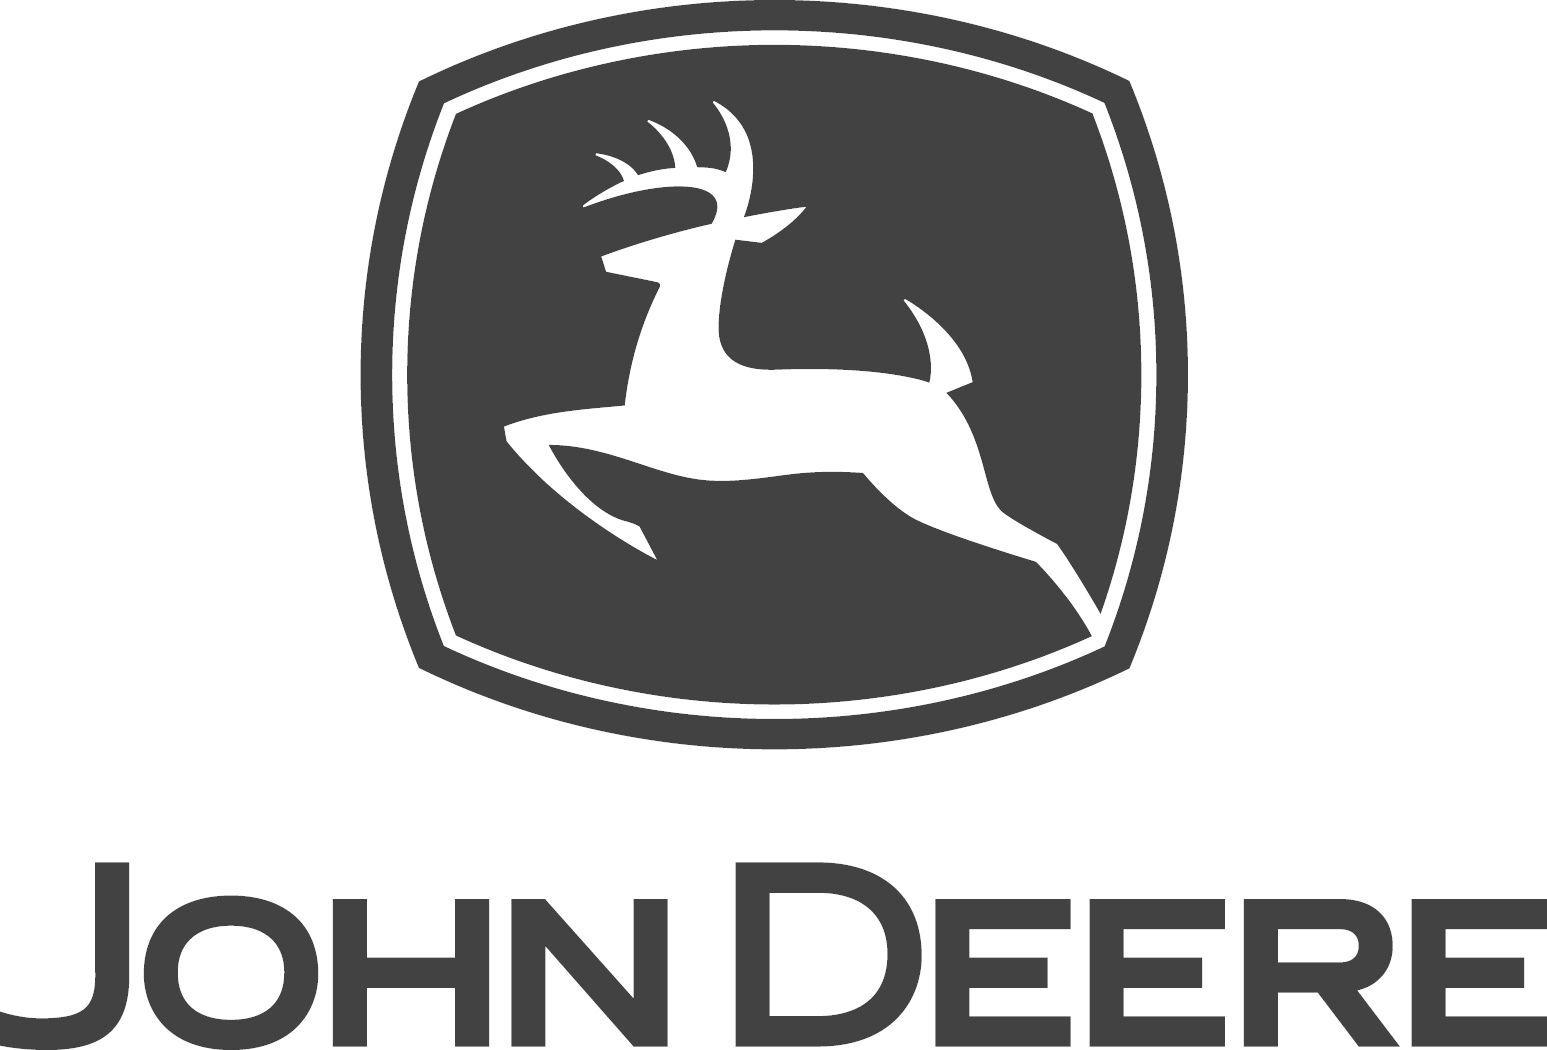 2018 John Deere Logo - John Deere Logos